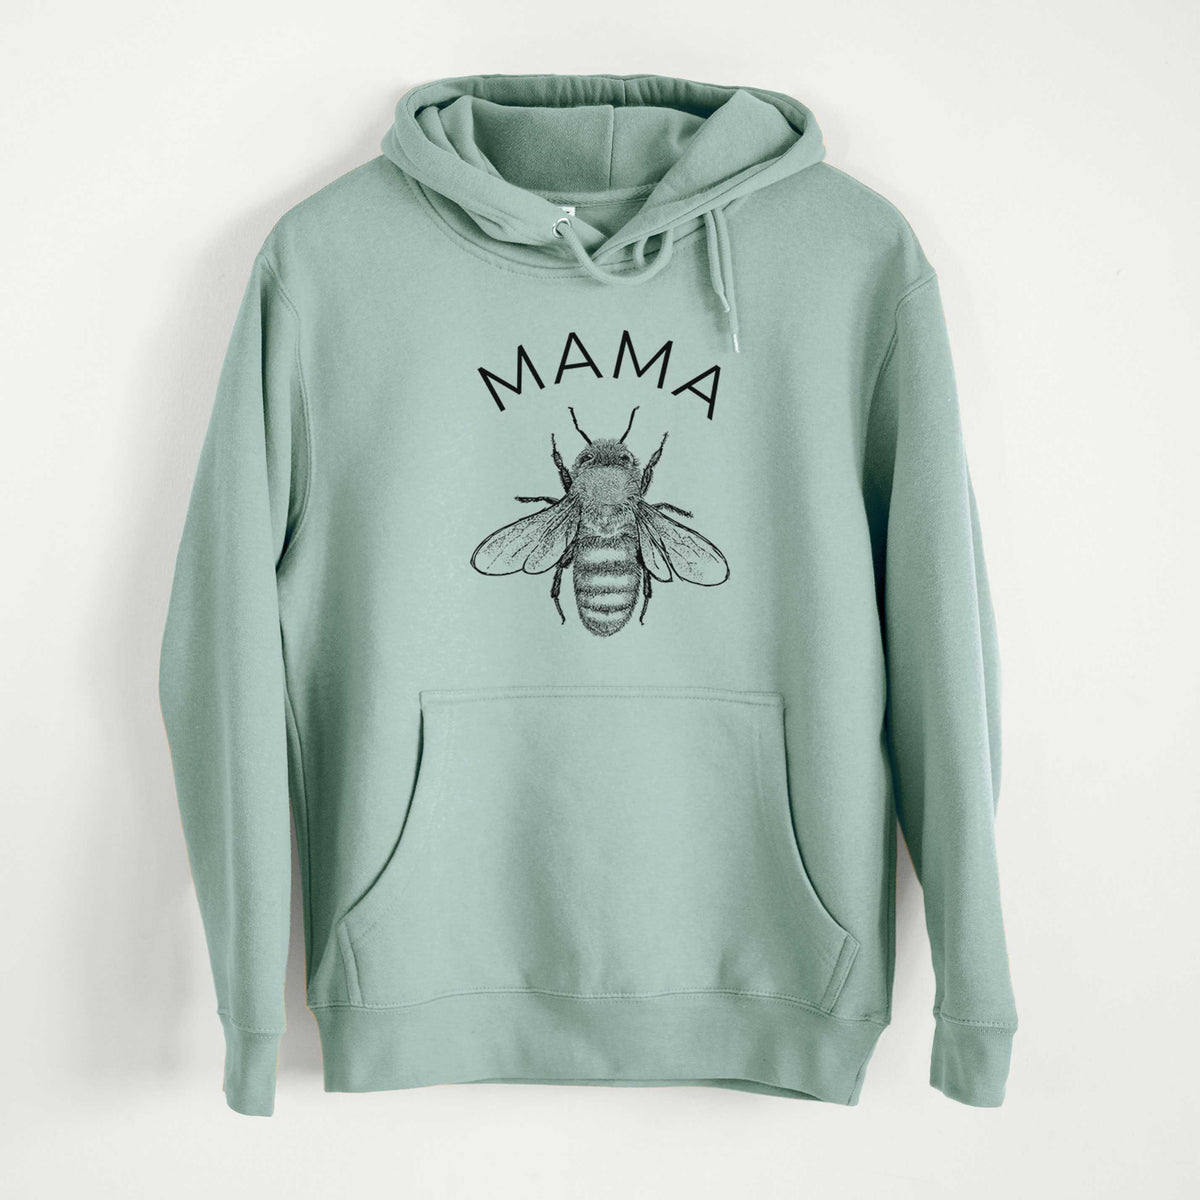 Mama Bee  - Mid-Weight Unisex Premium Blend Hoodie